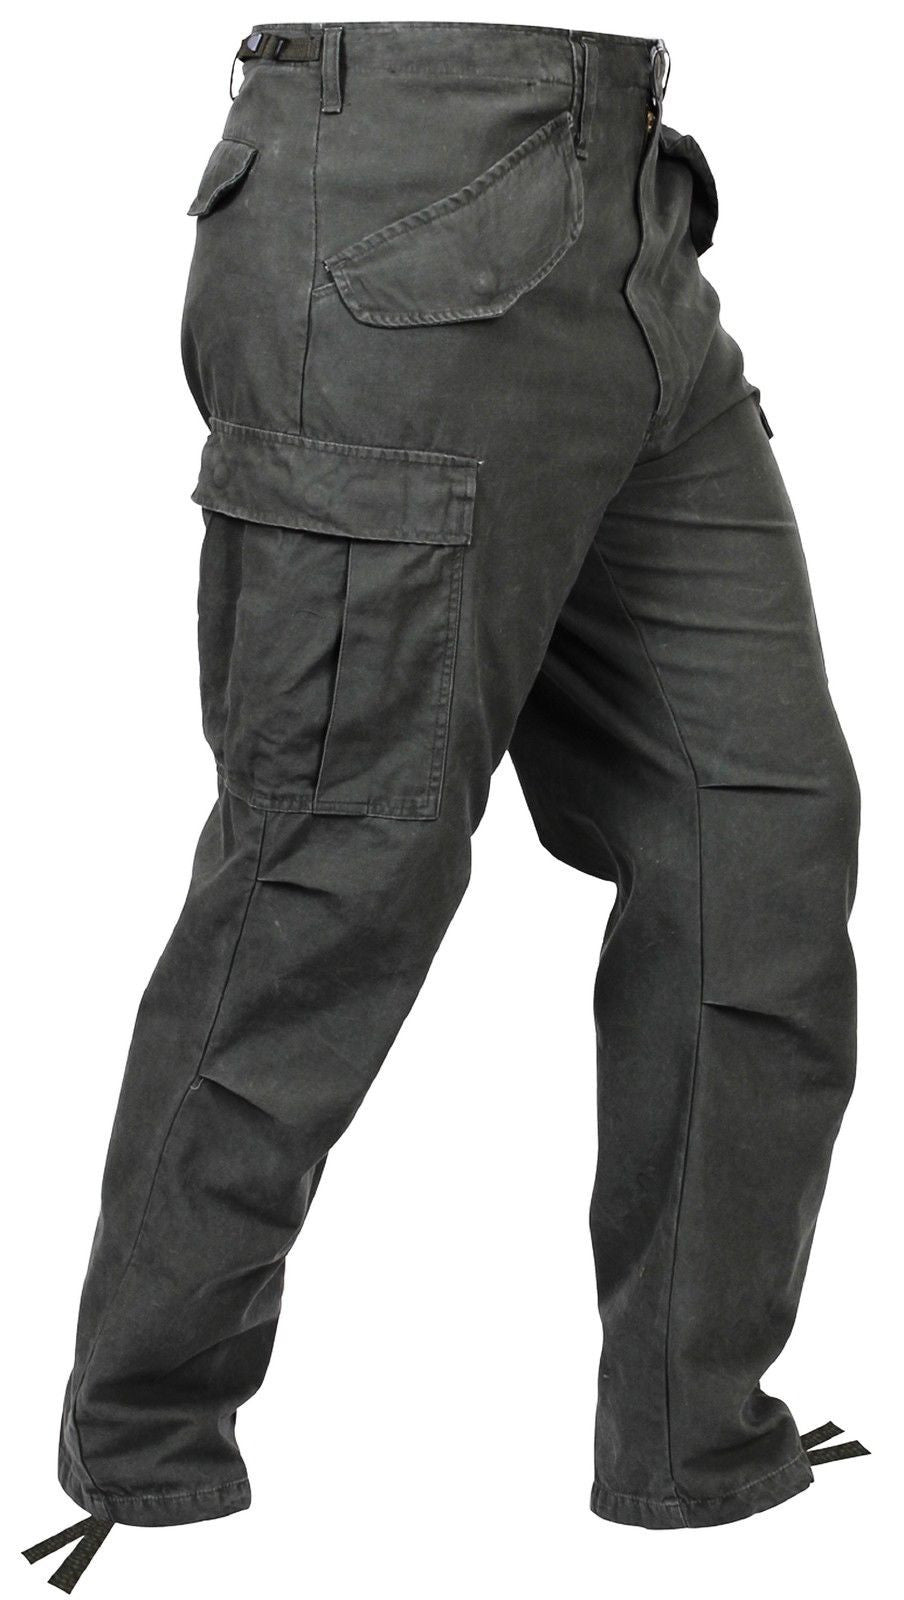 Men's Black Vintage M-65 GI-Style Fatigue Field Cargo Pants - Rothco 2644